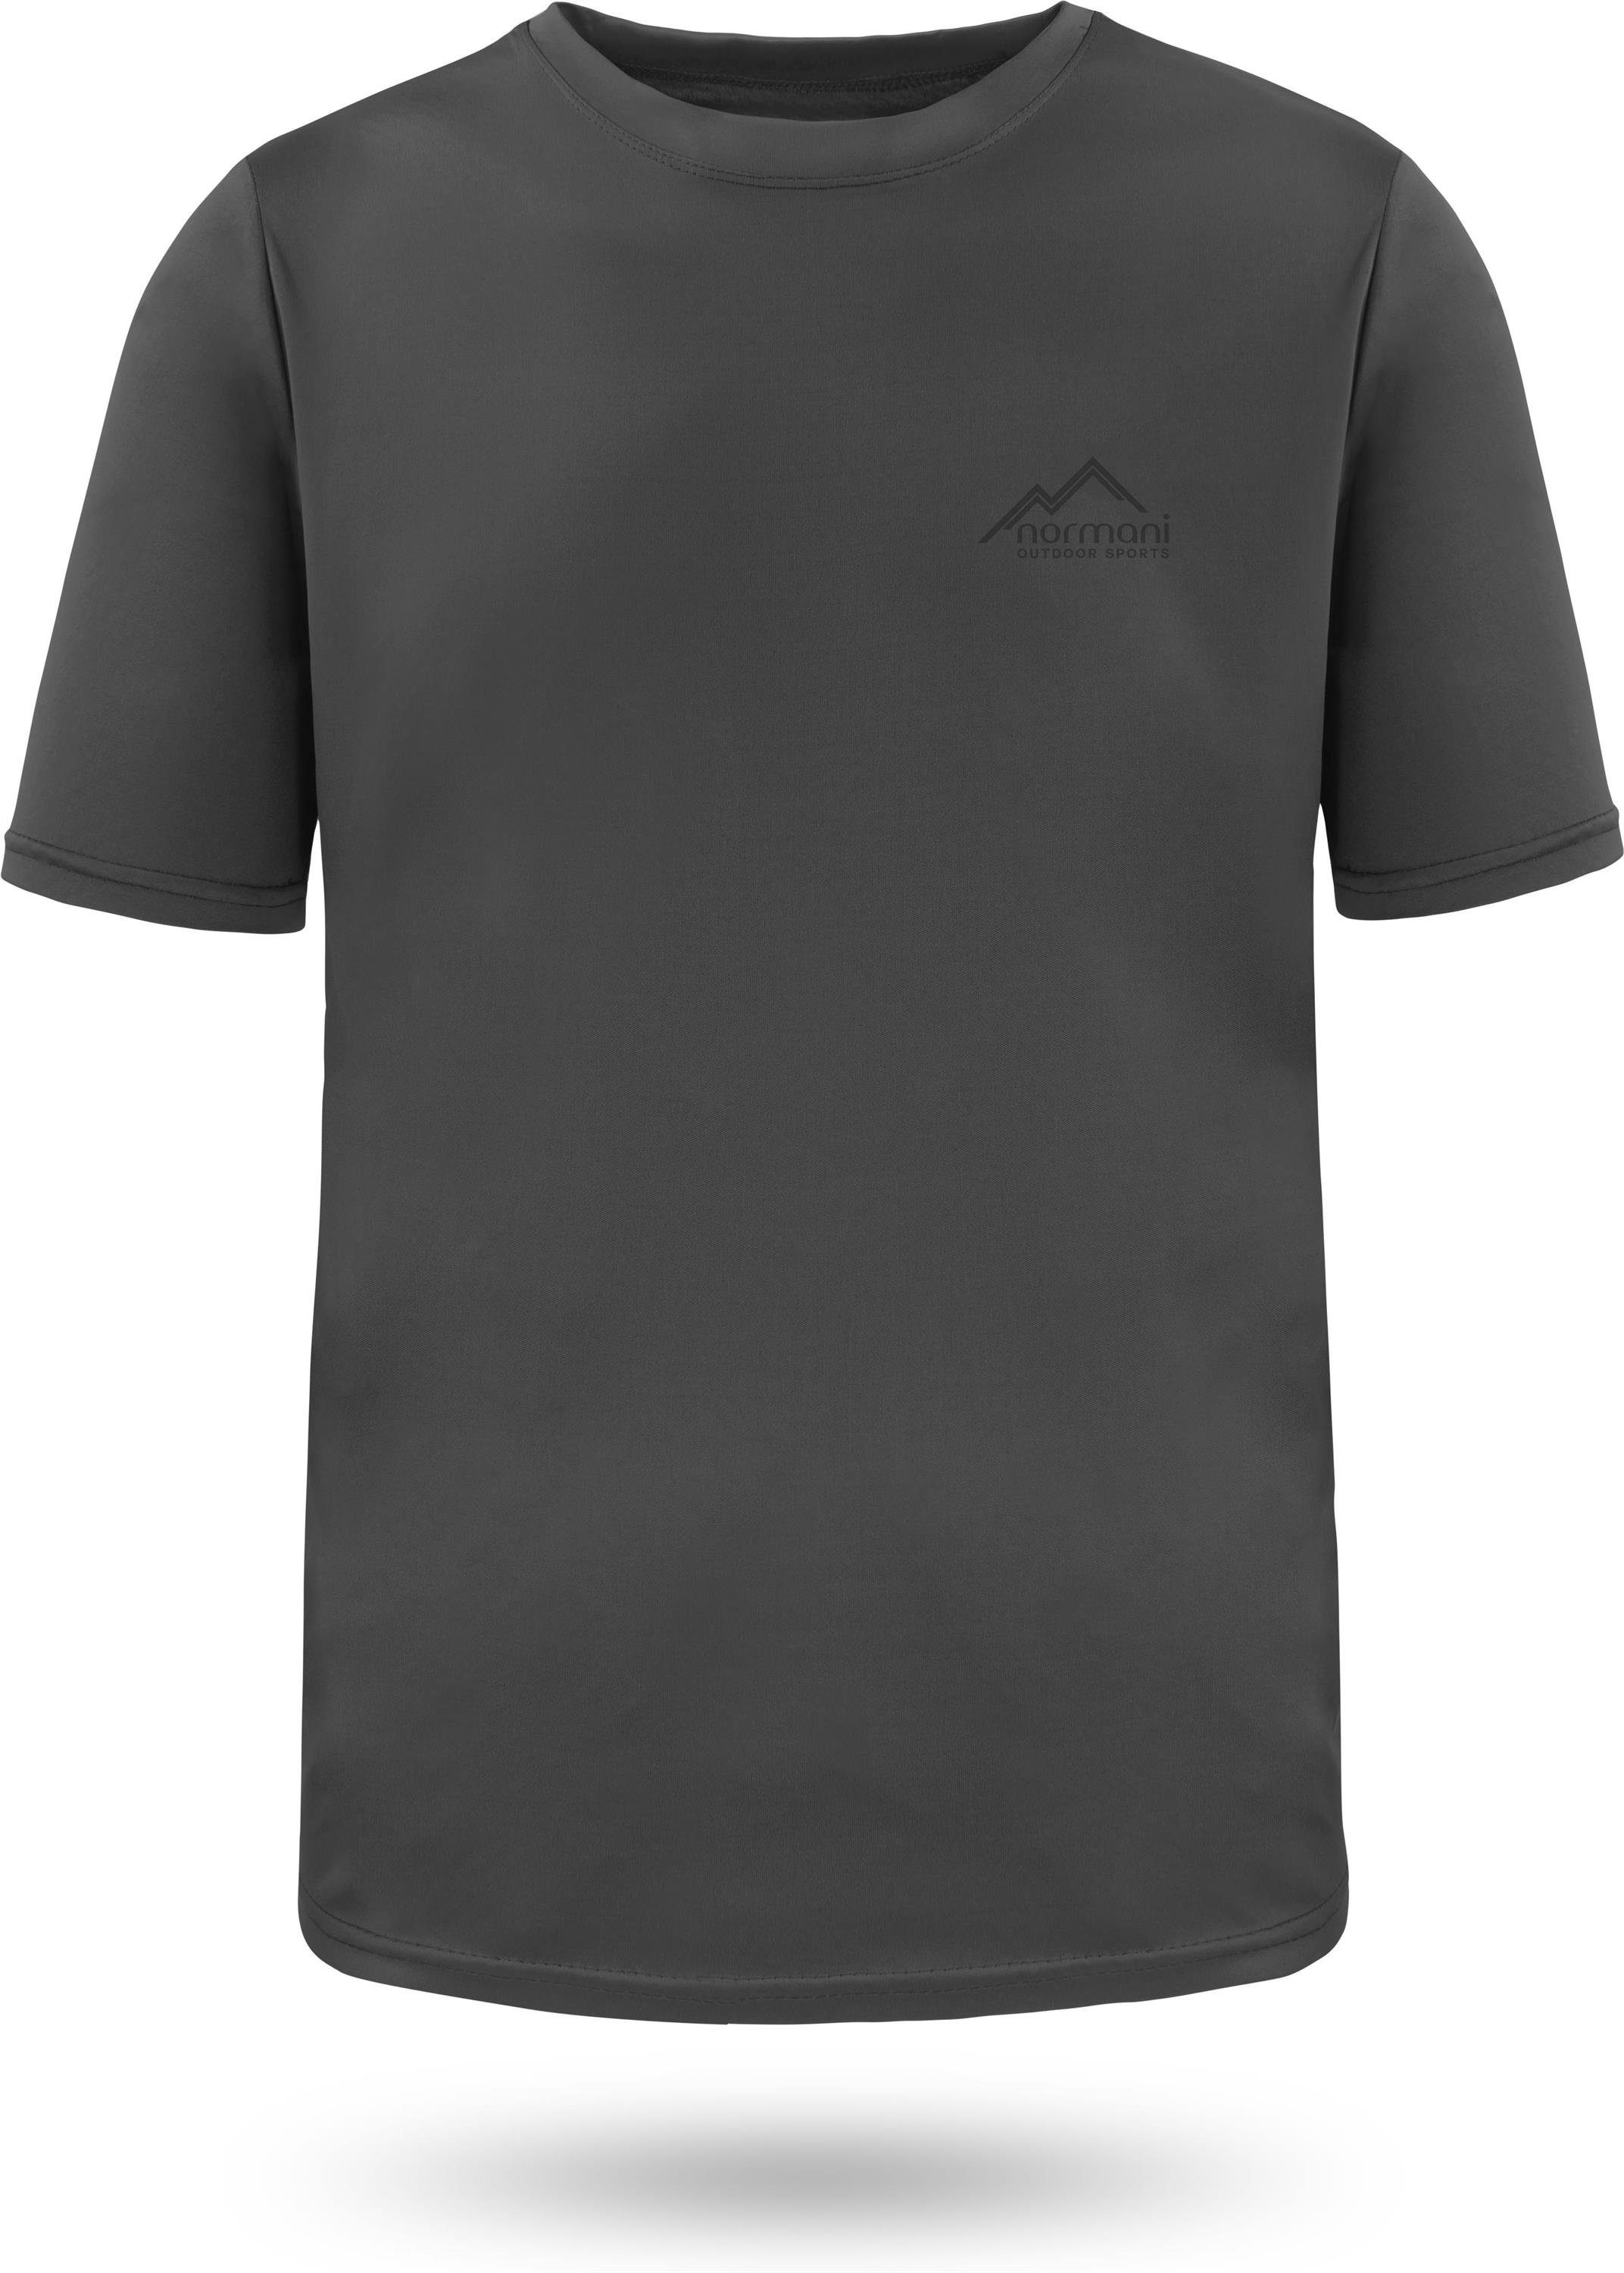 normani Funktionsshirt »Herren T-Shirt Agra« Kurzarm Sportswear  Funktions-Sport Fitness Shirt mt Cooling-Material online kaufen | OTTO